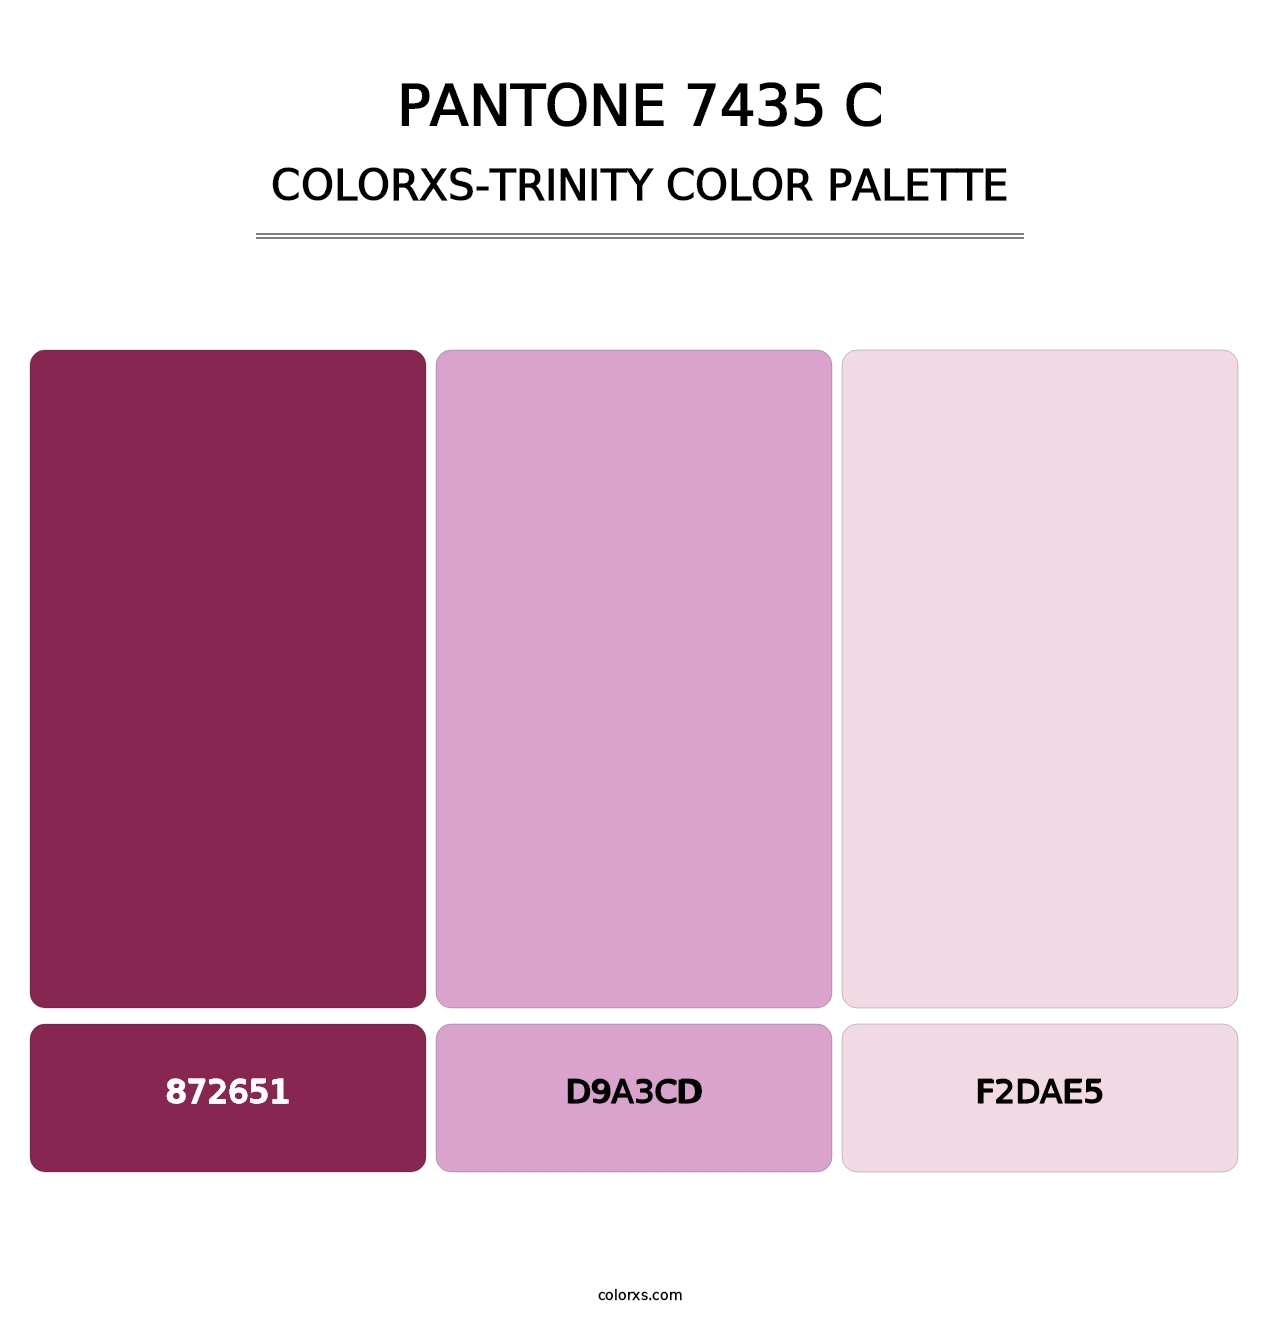 PANTONE 7435 C - Colorxs Trinity Palette